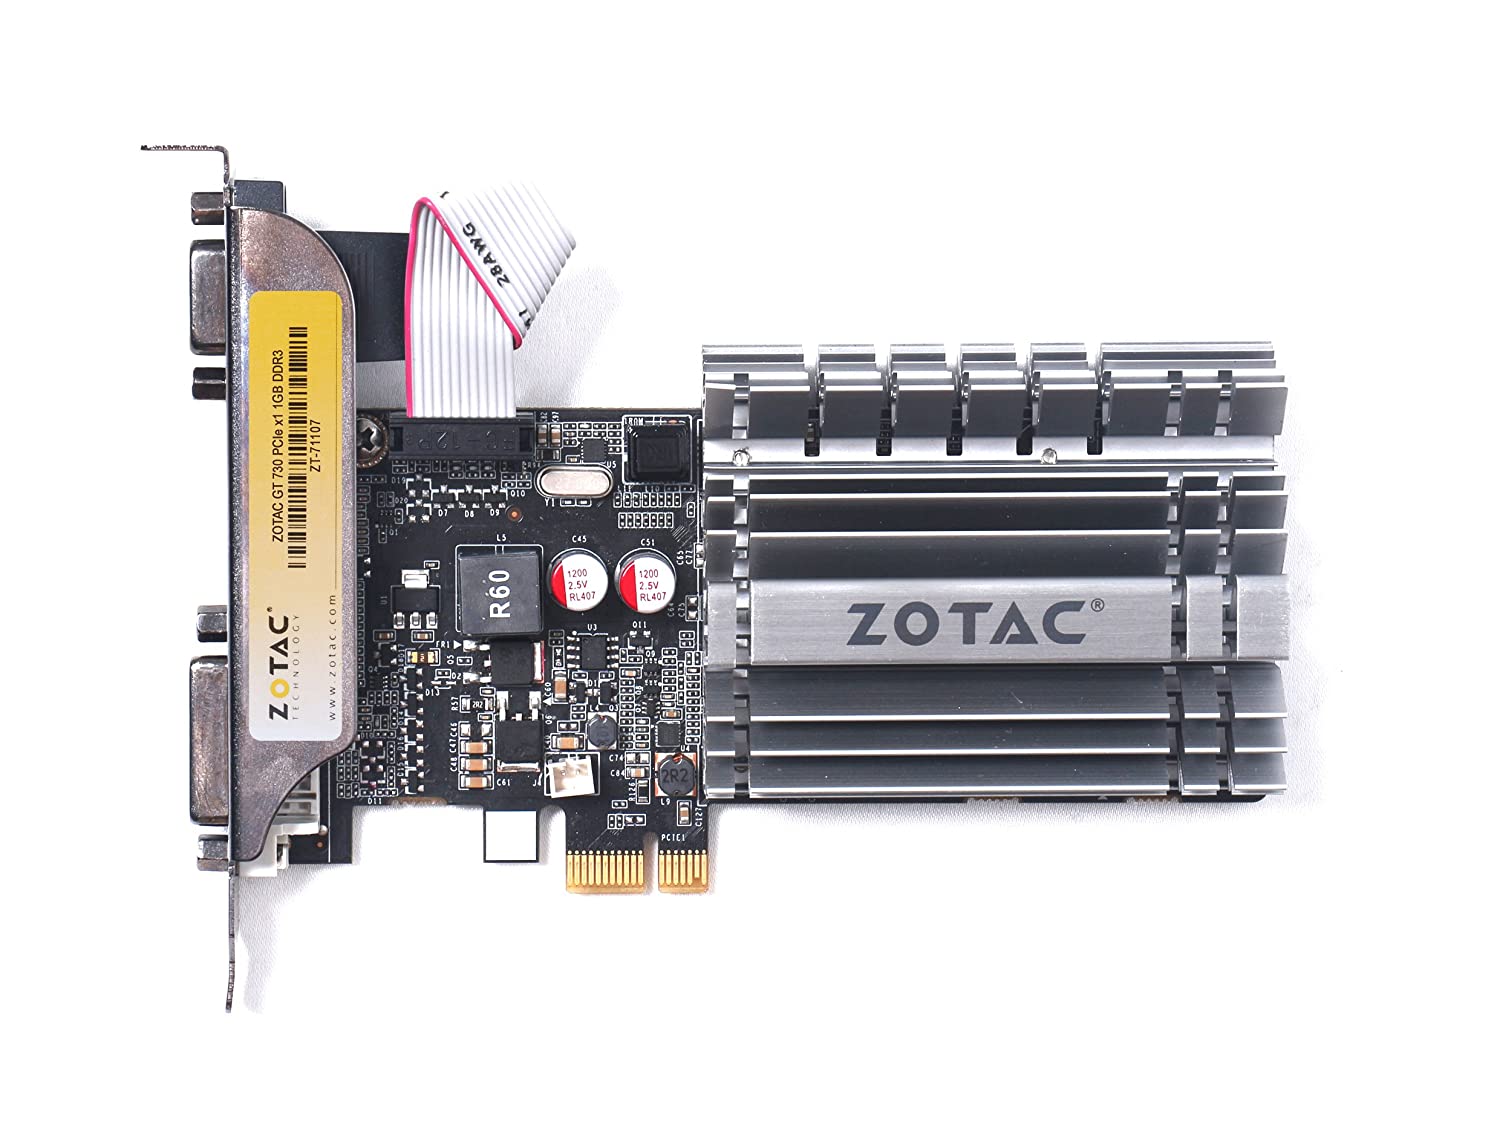 Zotac NVIDIA GeForce GT 730 Graphic Card - 4 GB DDR3 SDRAM 